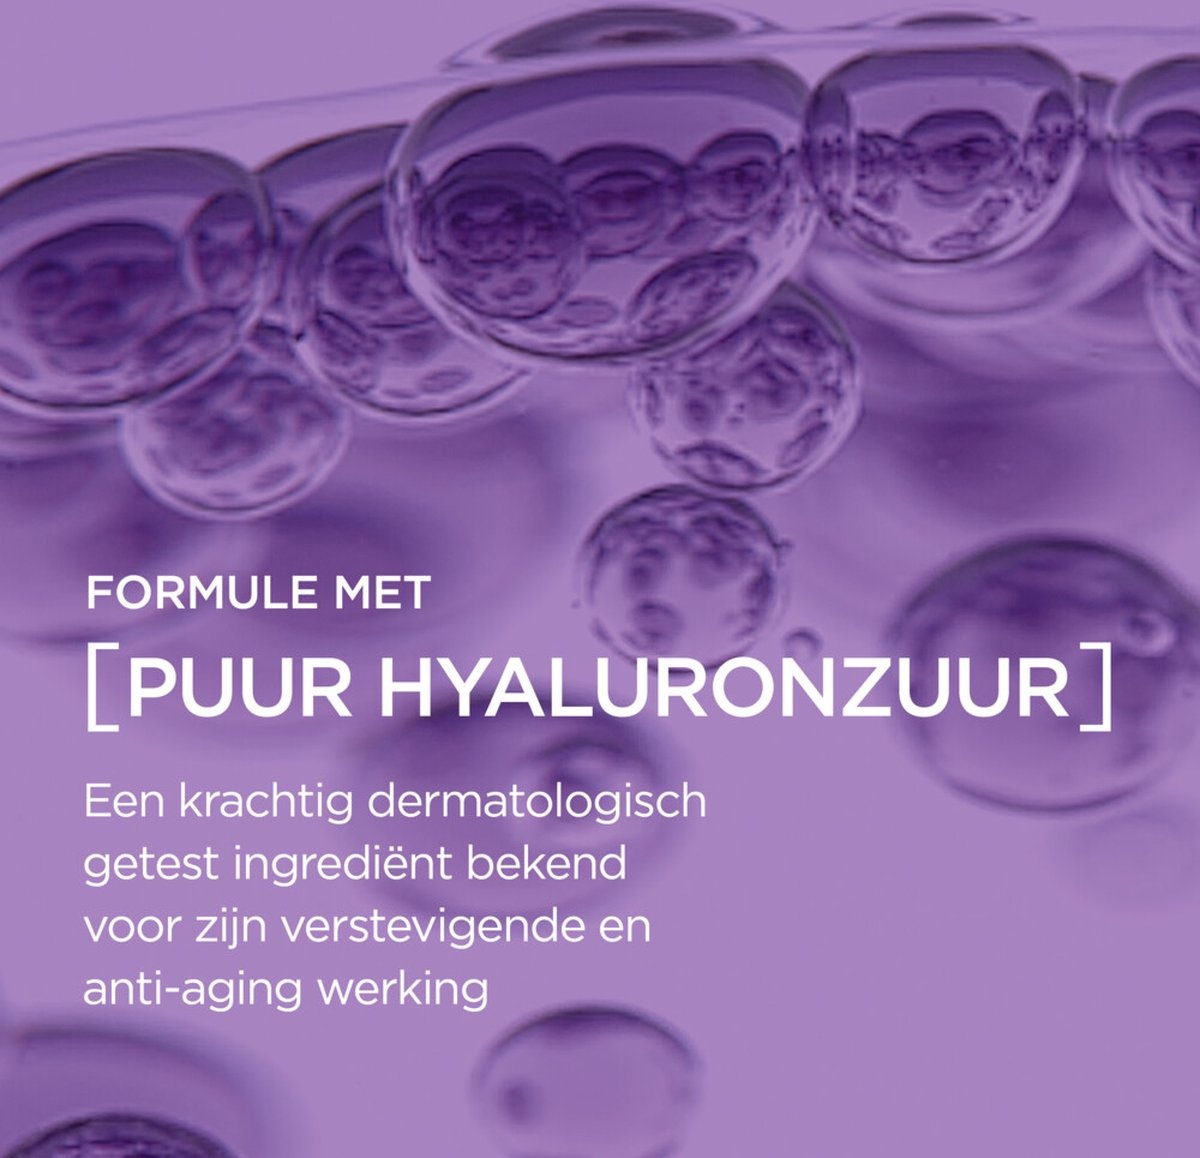 L'Oréal Paris Revitalift Volumizing Micellar Water - Facial Cleanser with Hyaluronic Acid - 200 ml